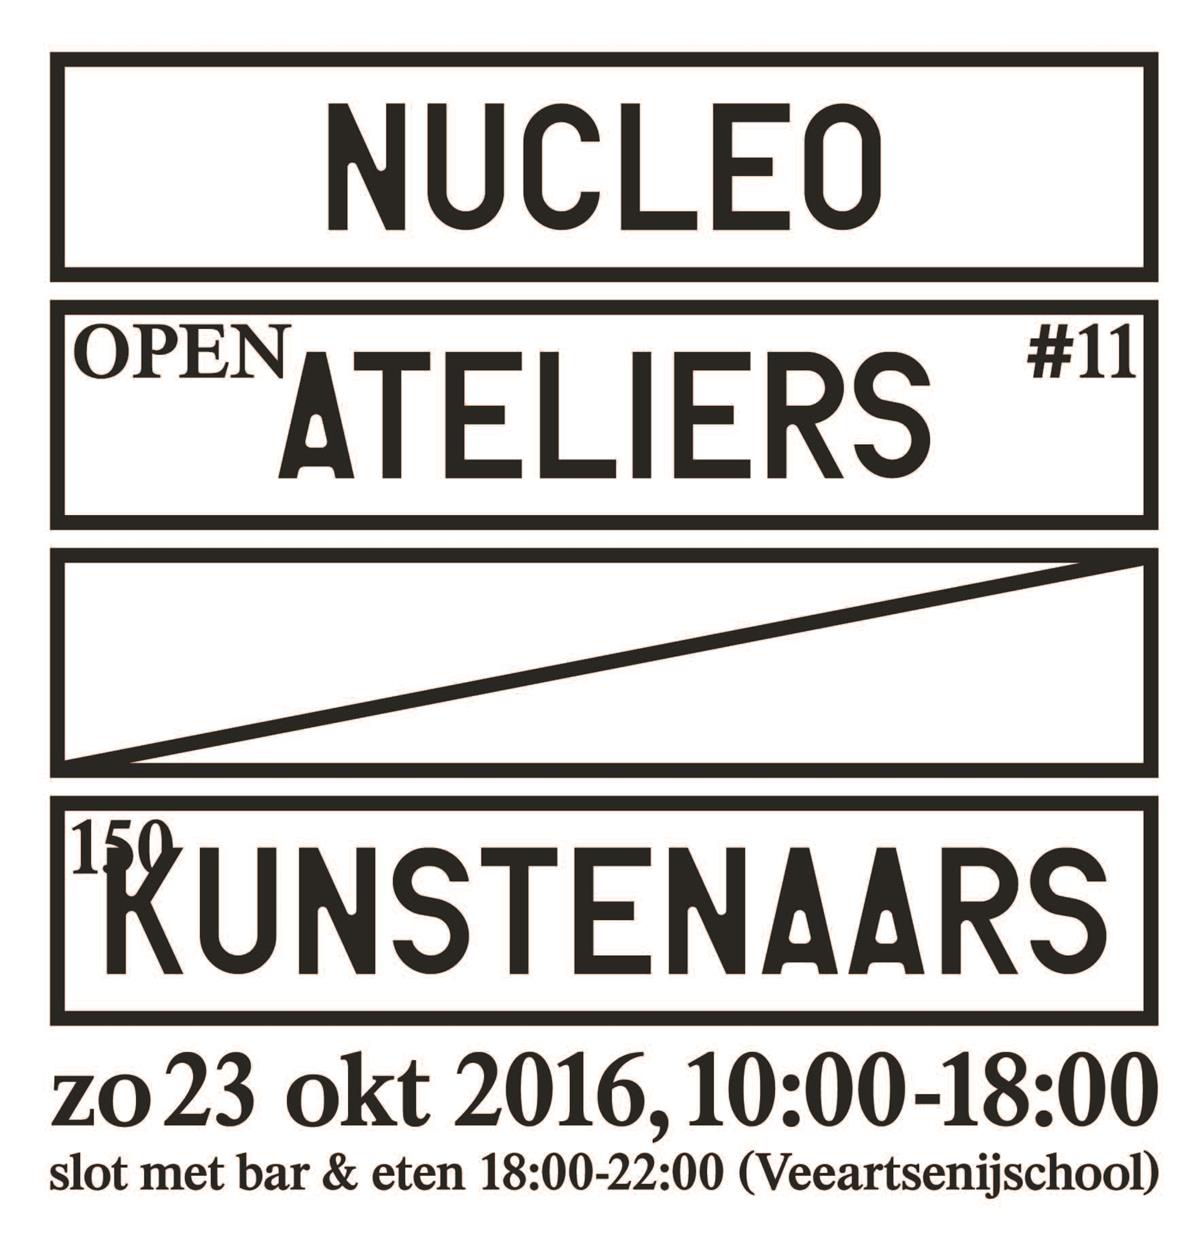 Nucleo open ateliers .jpg